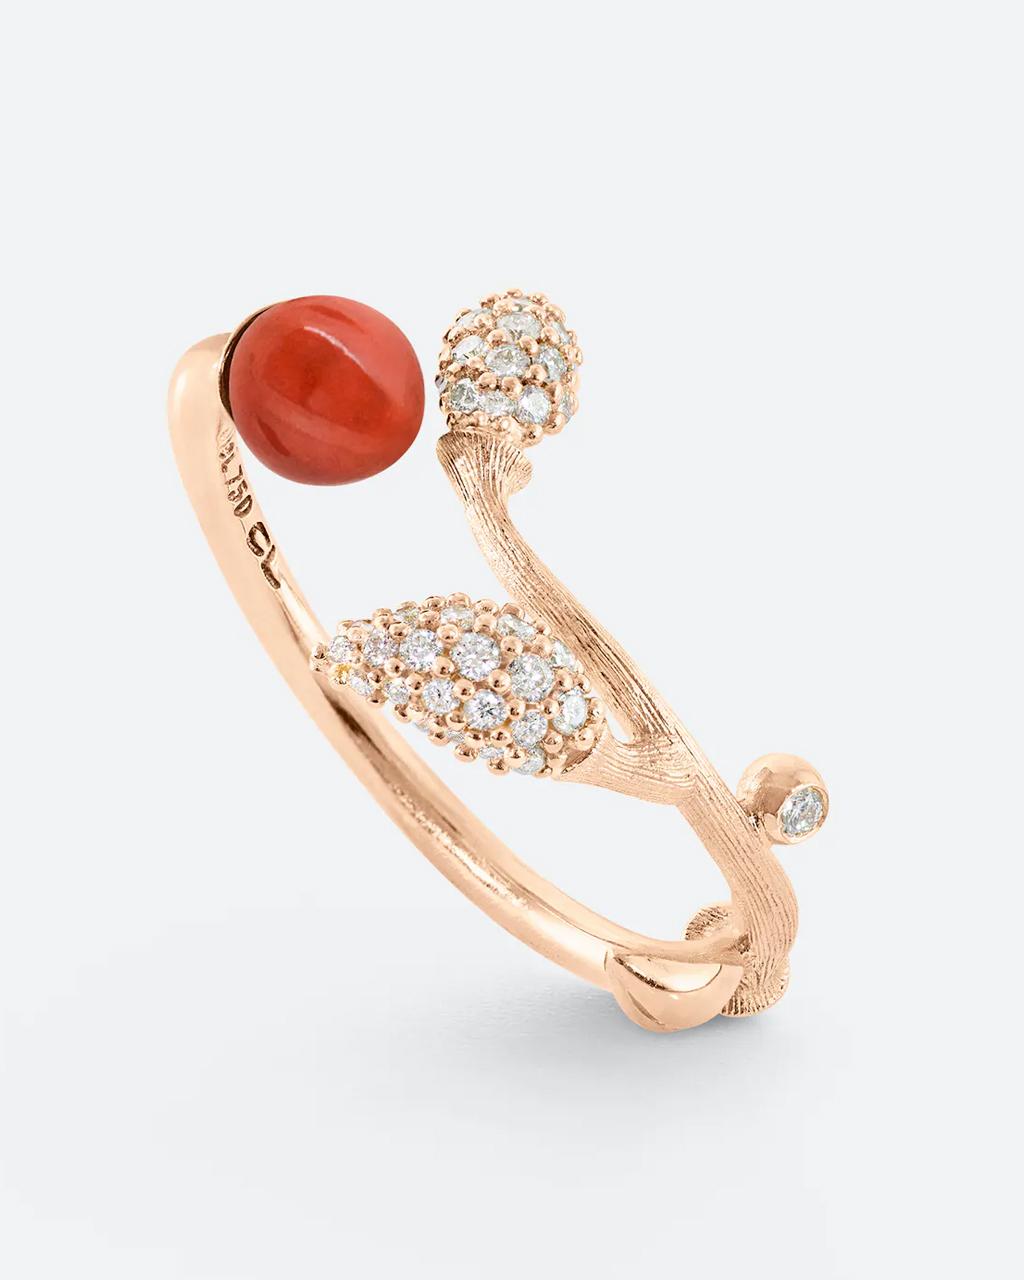 Ole Lynggaard 'Blooming' Red Coral & Diamond Ring